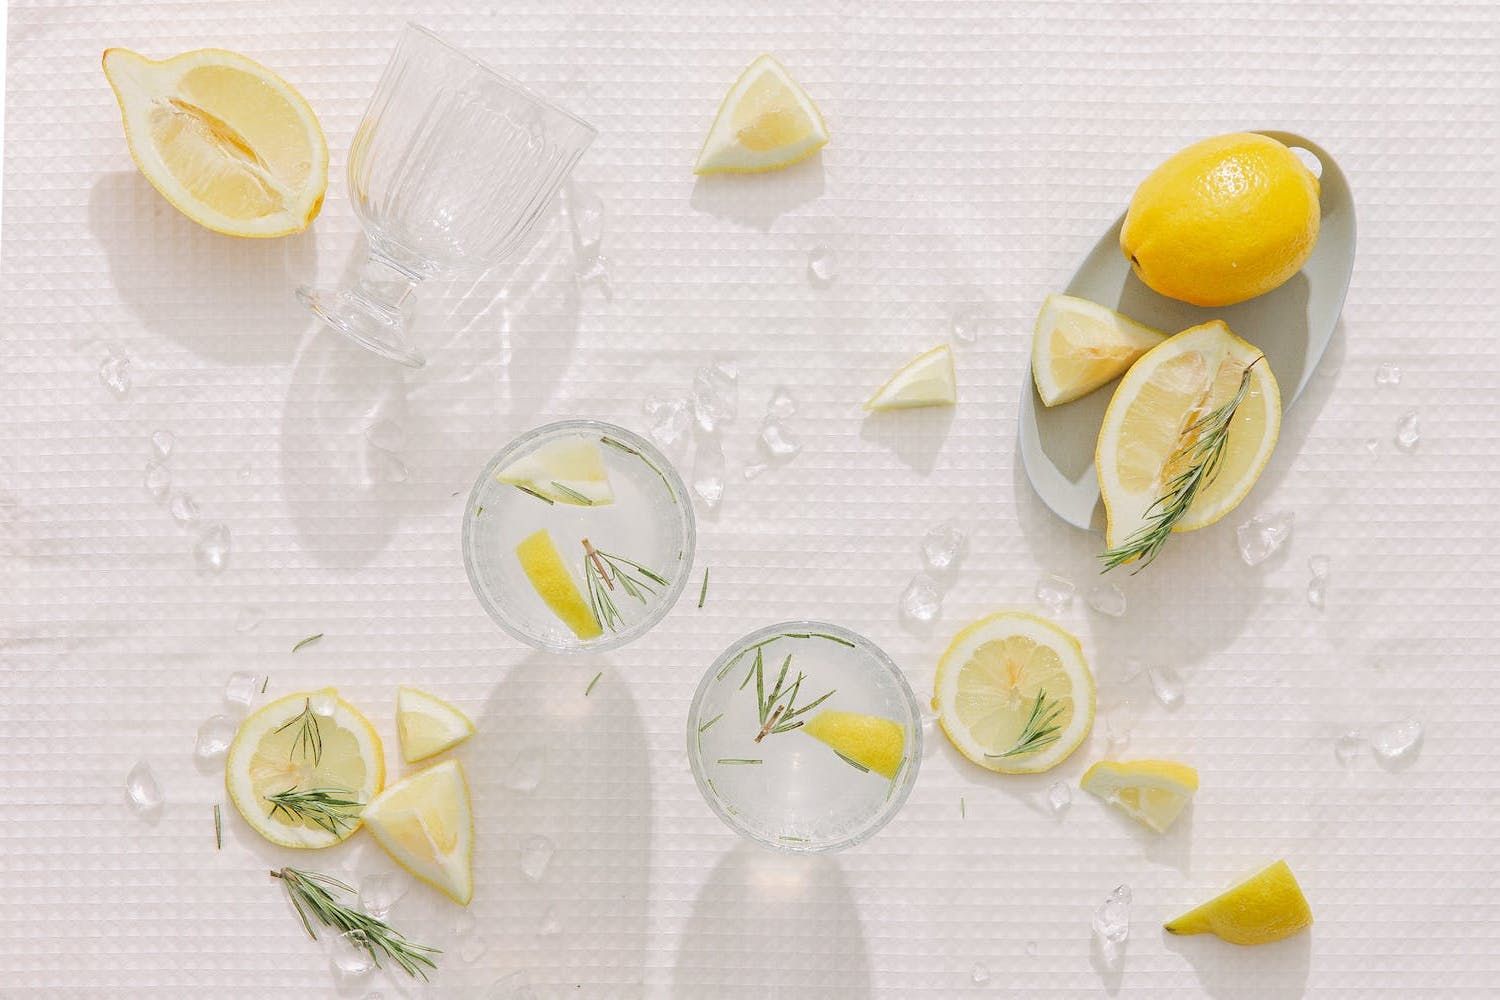 lemon water with slices lemon and lemons around it